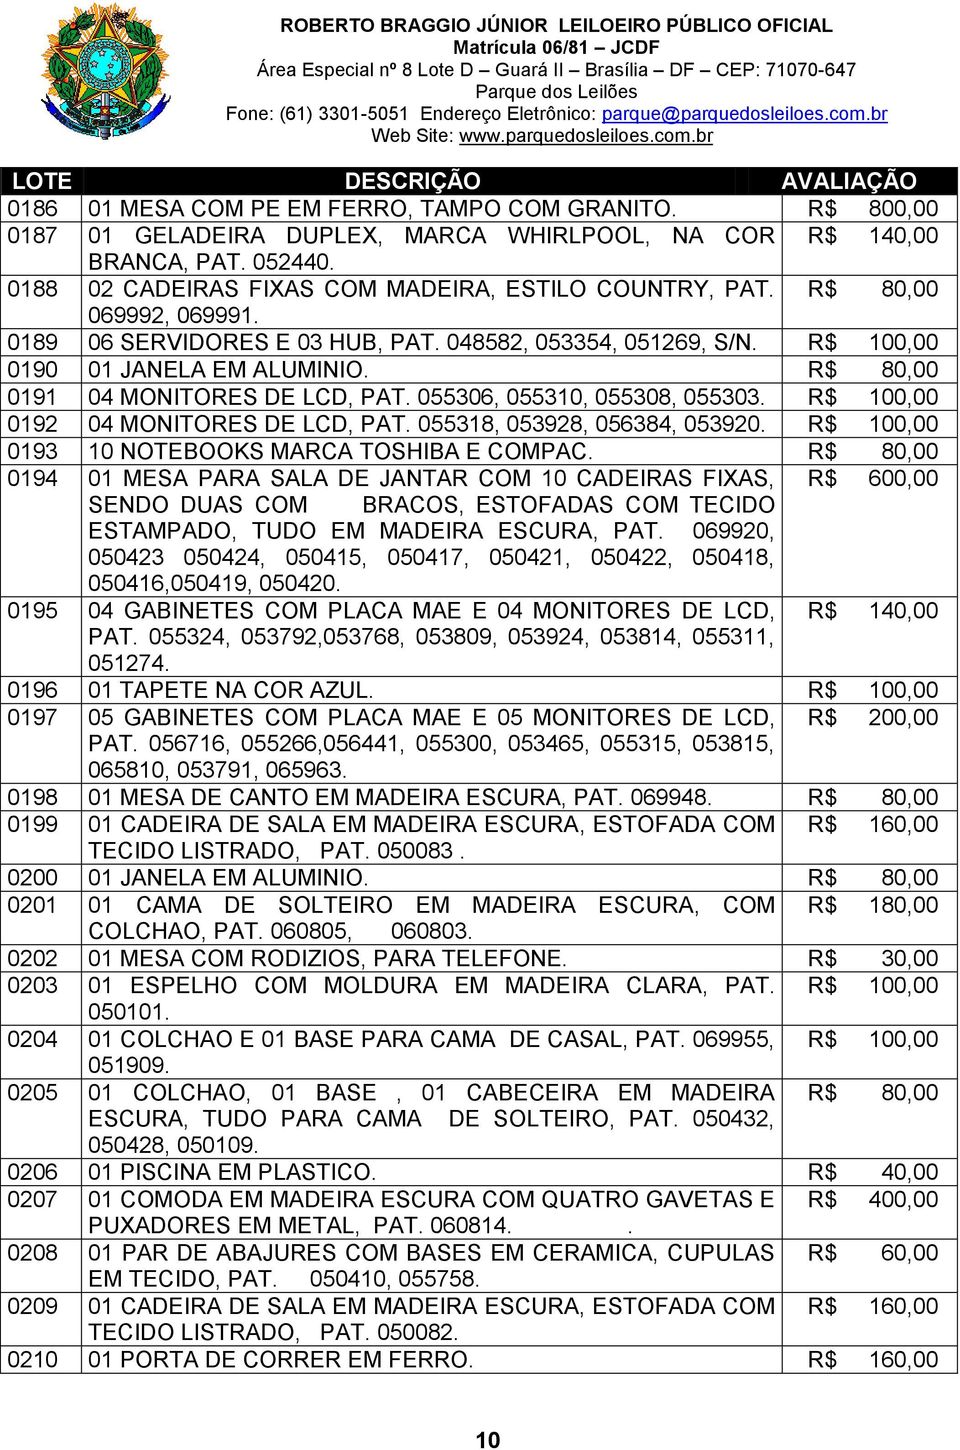 R$ 100,00 0192 04 MONITORES DE LCD, PAT. 055318, 053928, 056384, 053920. R$ 100,00 0193 10 NOTEBOOKS MARCA TOSHIBA E COMPAC.